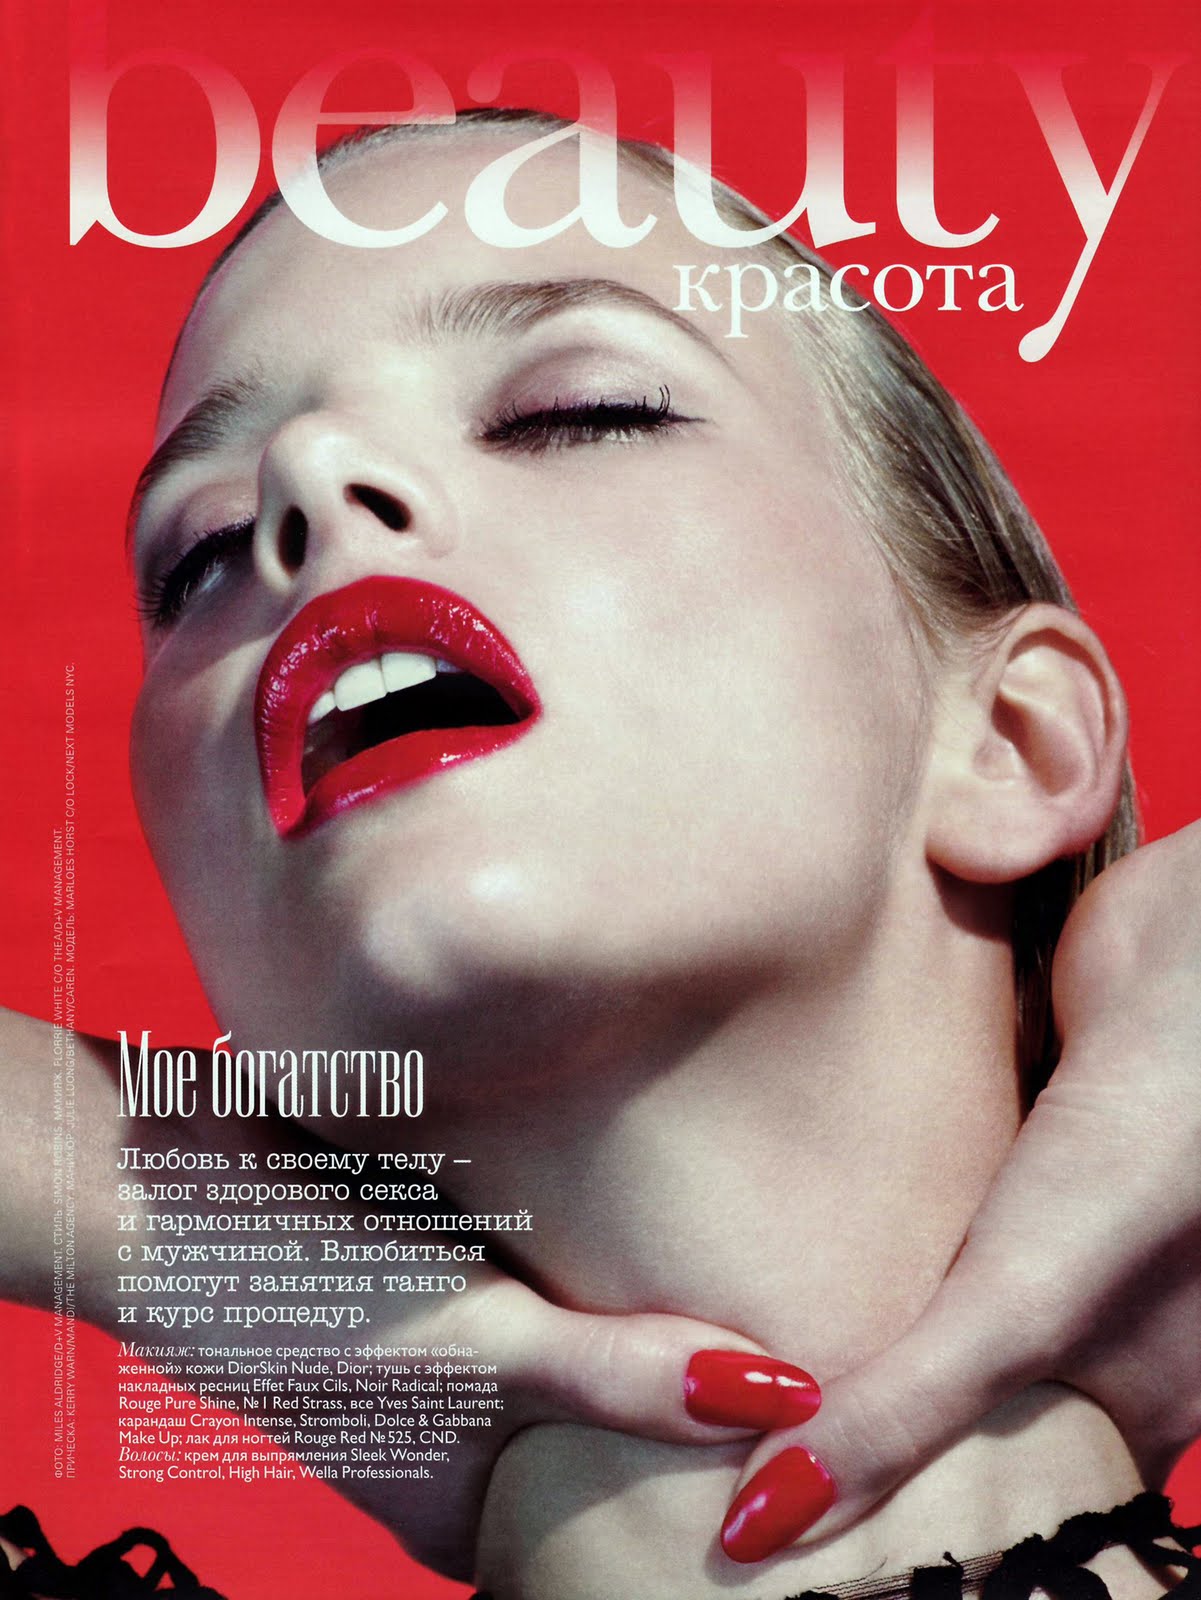 http://3.bp.blogspot.com/_asJW8uWEXUs/TBz9pgEalgI/AAAAAAAAAc8/kBGcbFWCv00/s1600/Marloes+Horst+covers+Vogue+Russia+June+2010%21.jpg